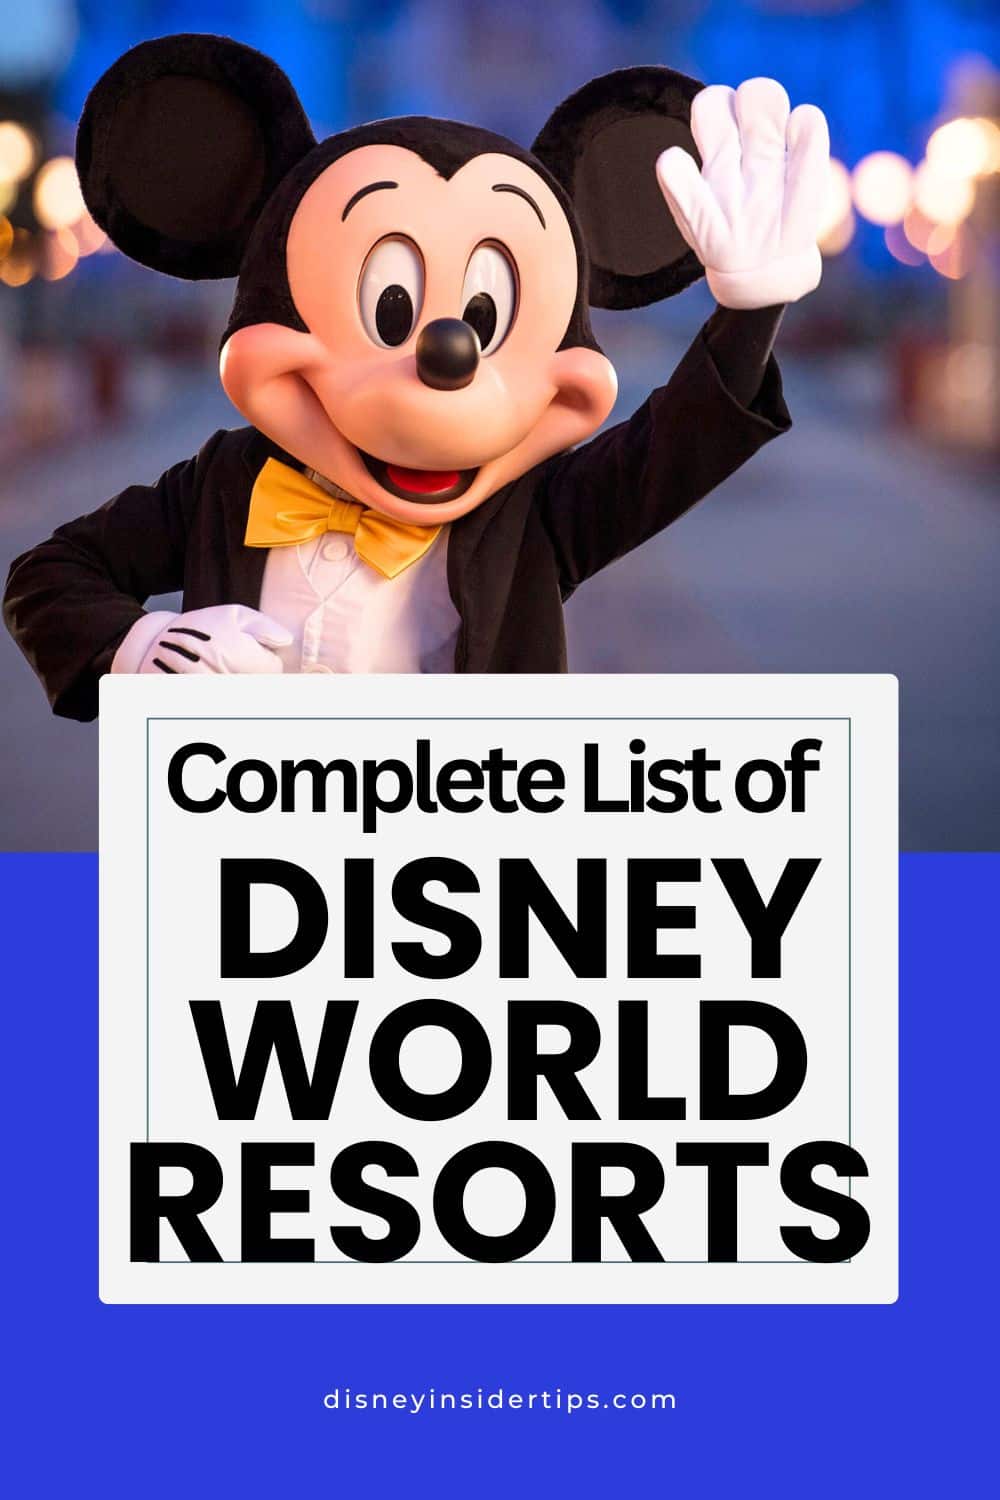 Complete List of Disney World Resorts